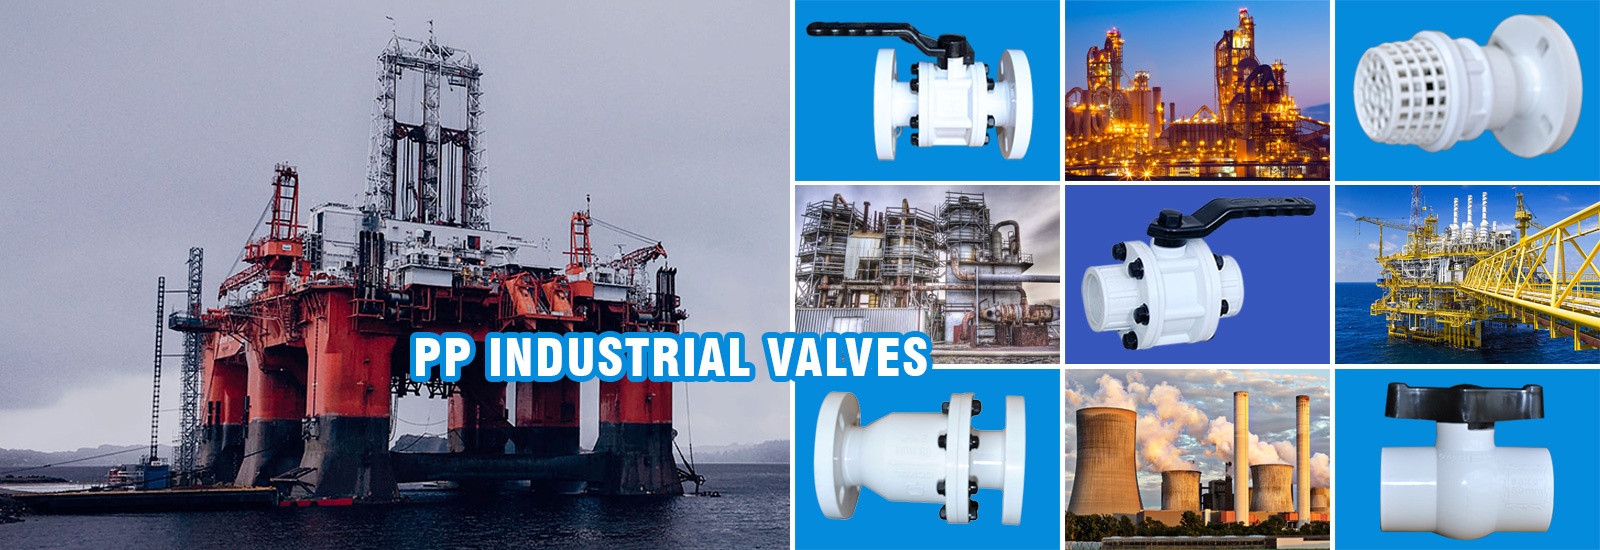 PP Industrial Valves suppliers - Gokul Poly Valves Pvt Ltd